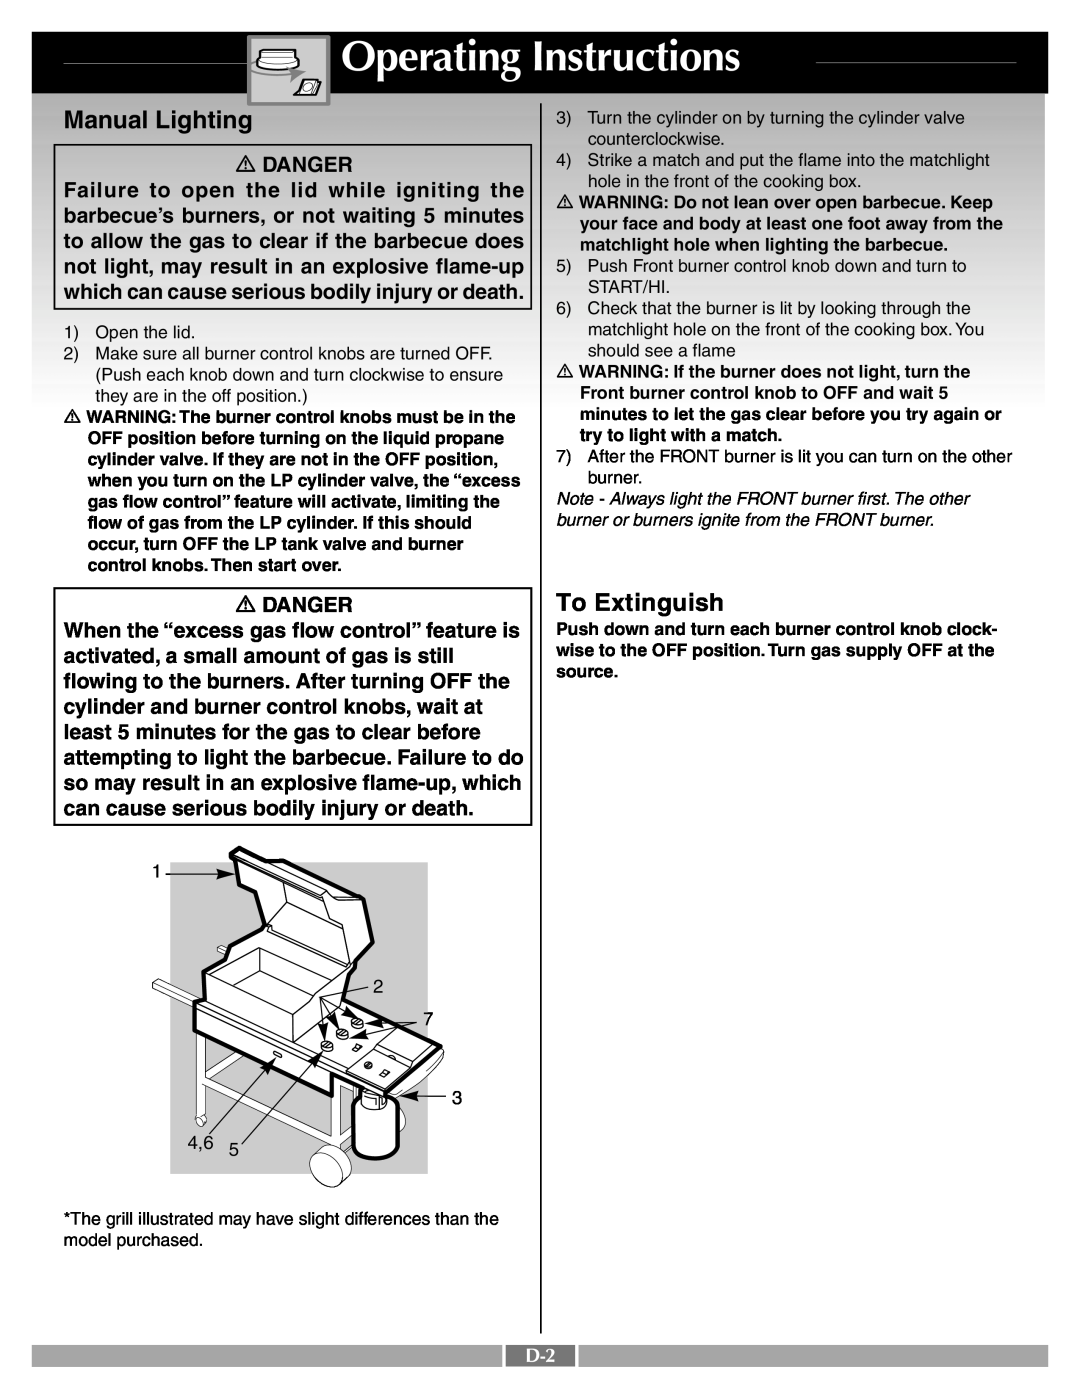 Weber 55249 manual Manual Lighting, Operating Instructions, To Extinguish, Danger 